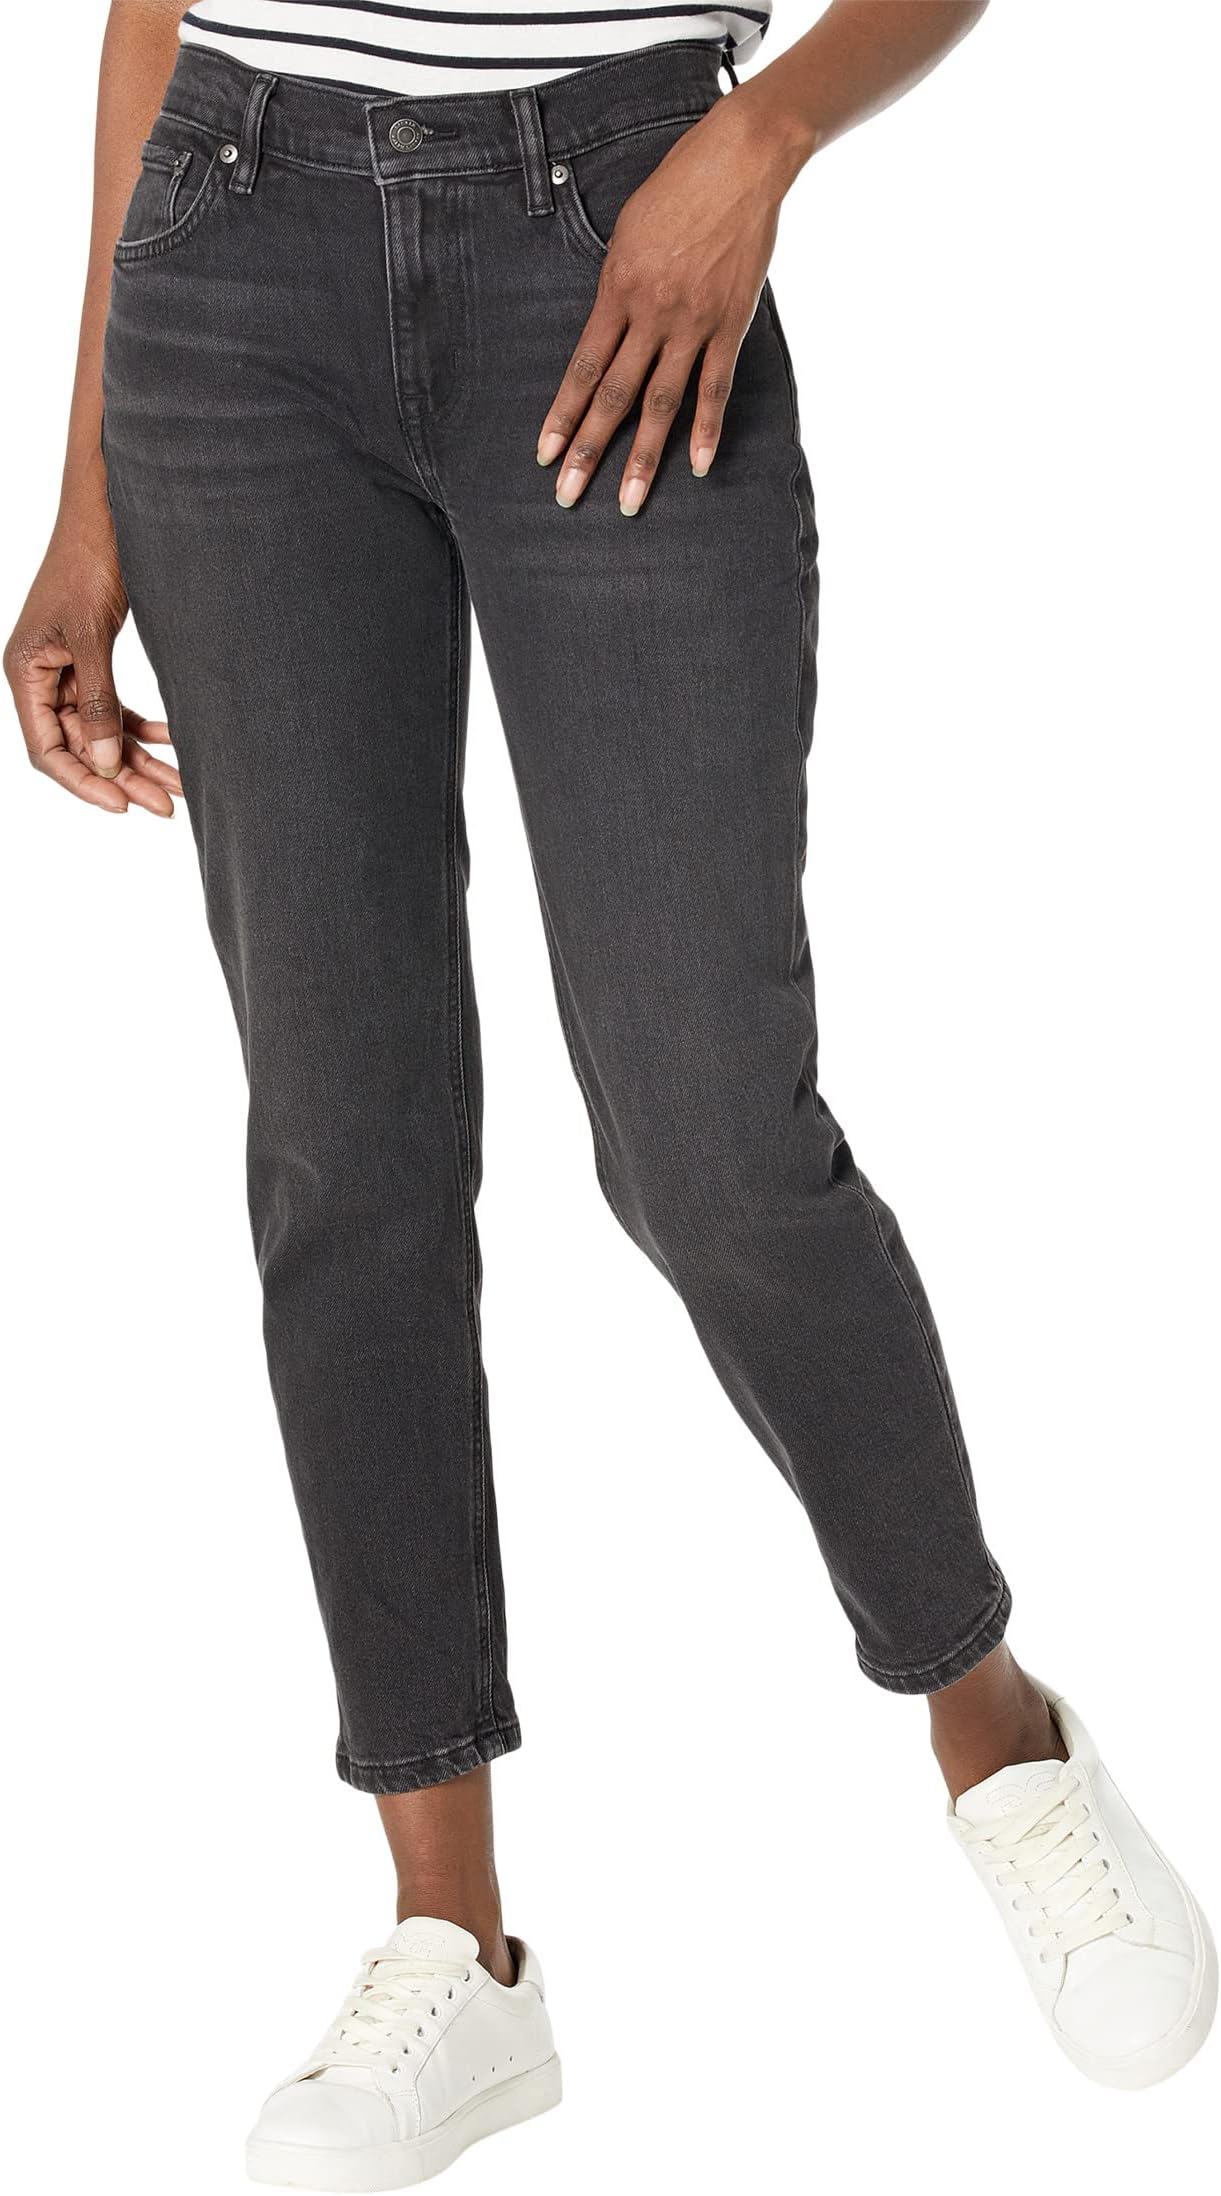 Джинсы Relaxed Tapered Ankle Jeans in Empire Black Wash LAUREN Ralph Lauren, цвет Empire Black Wash